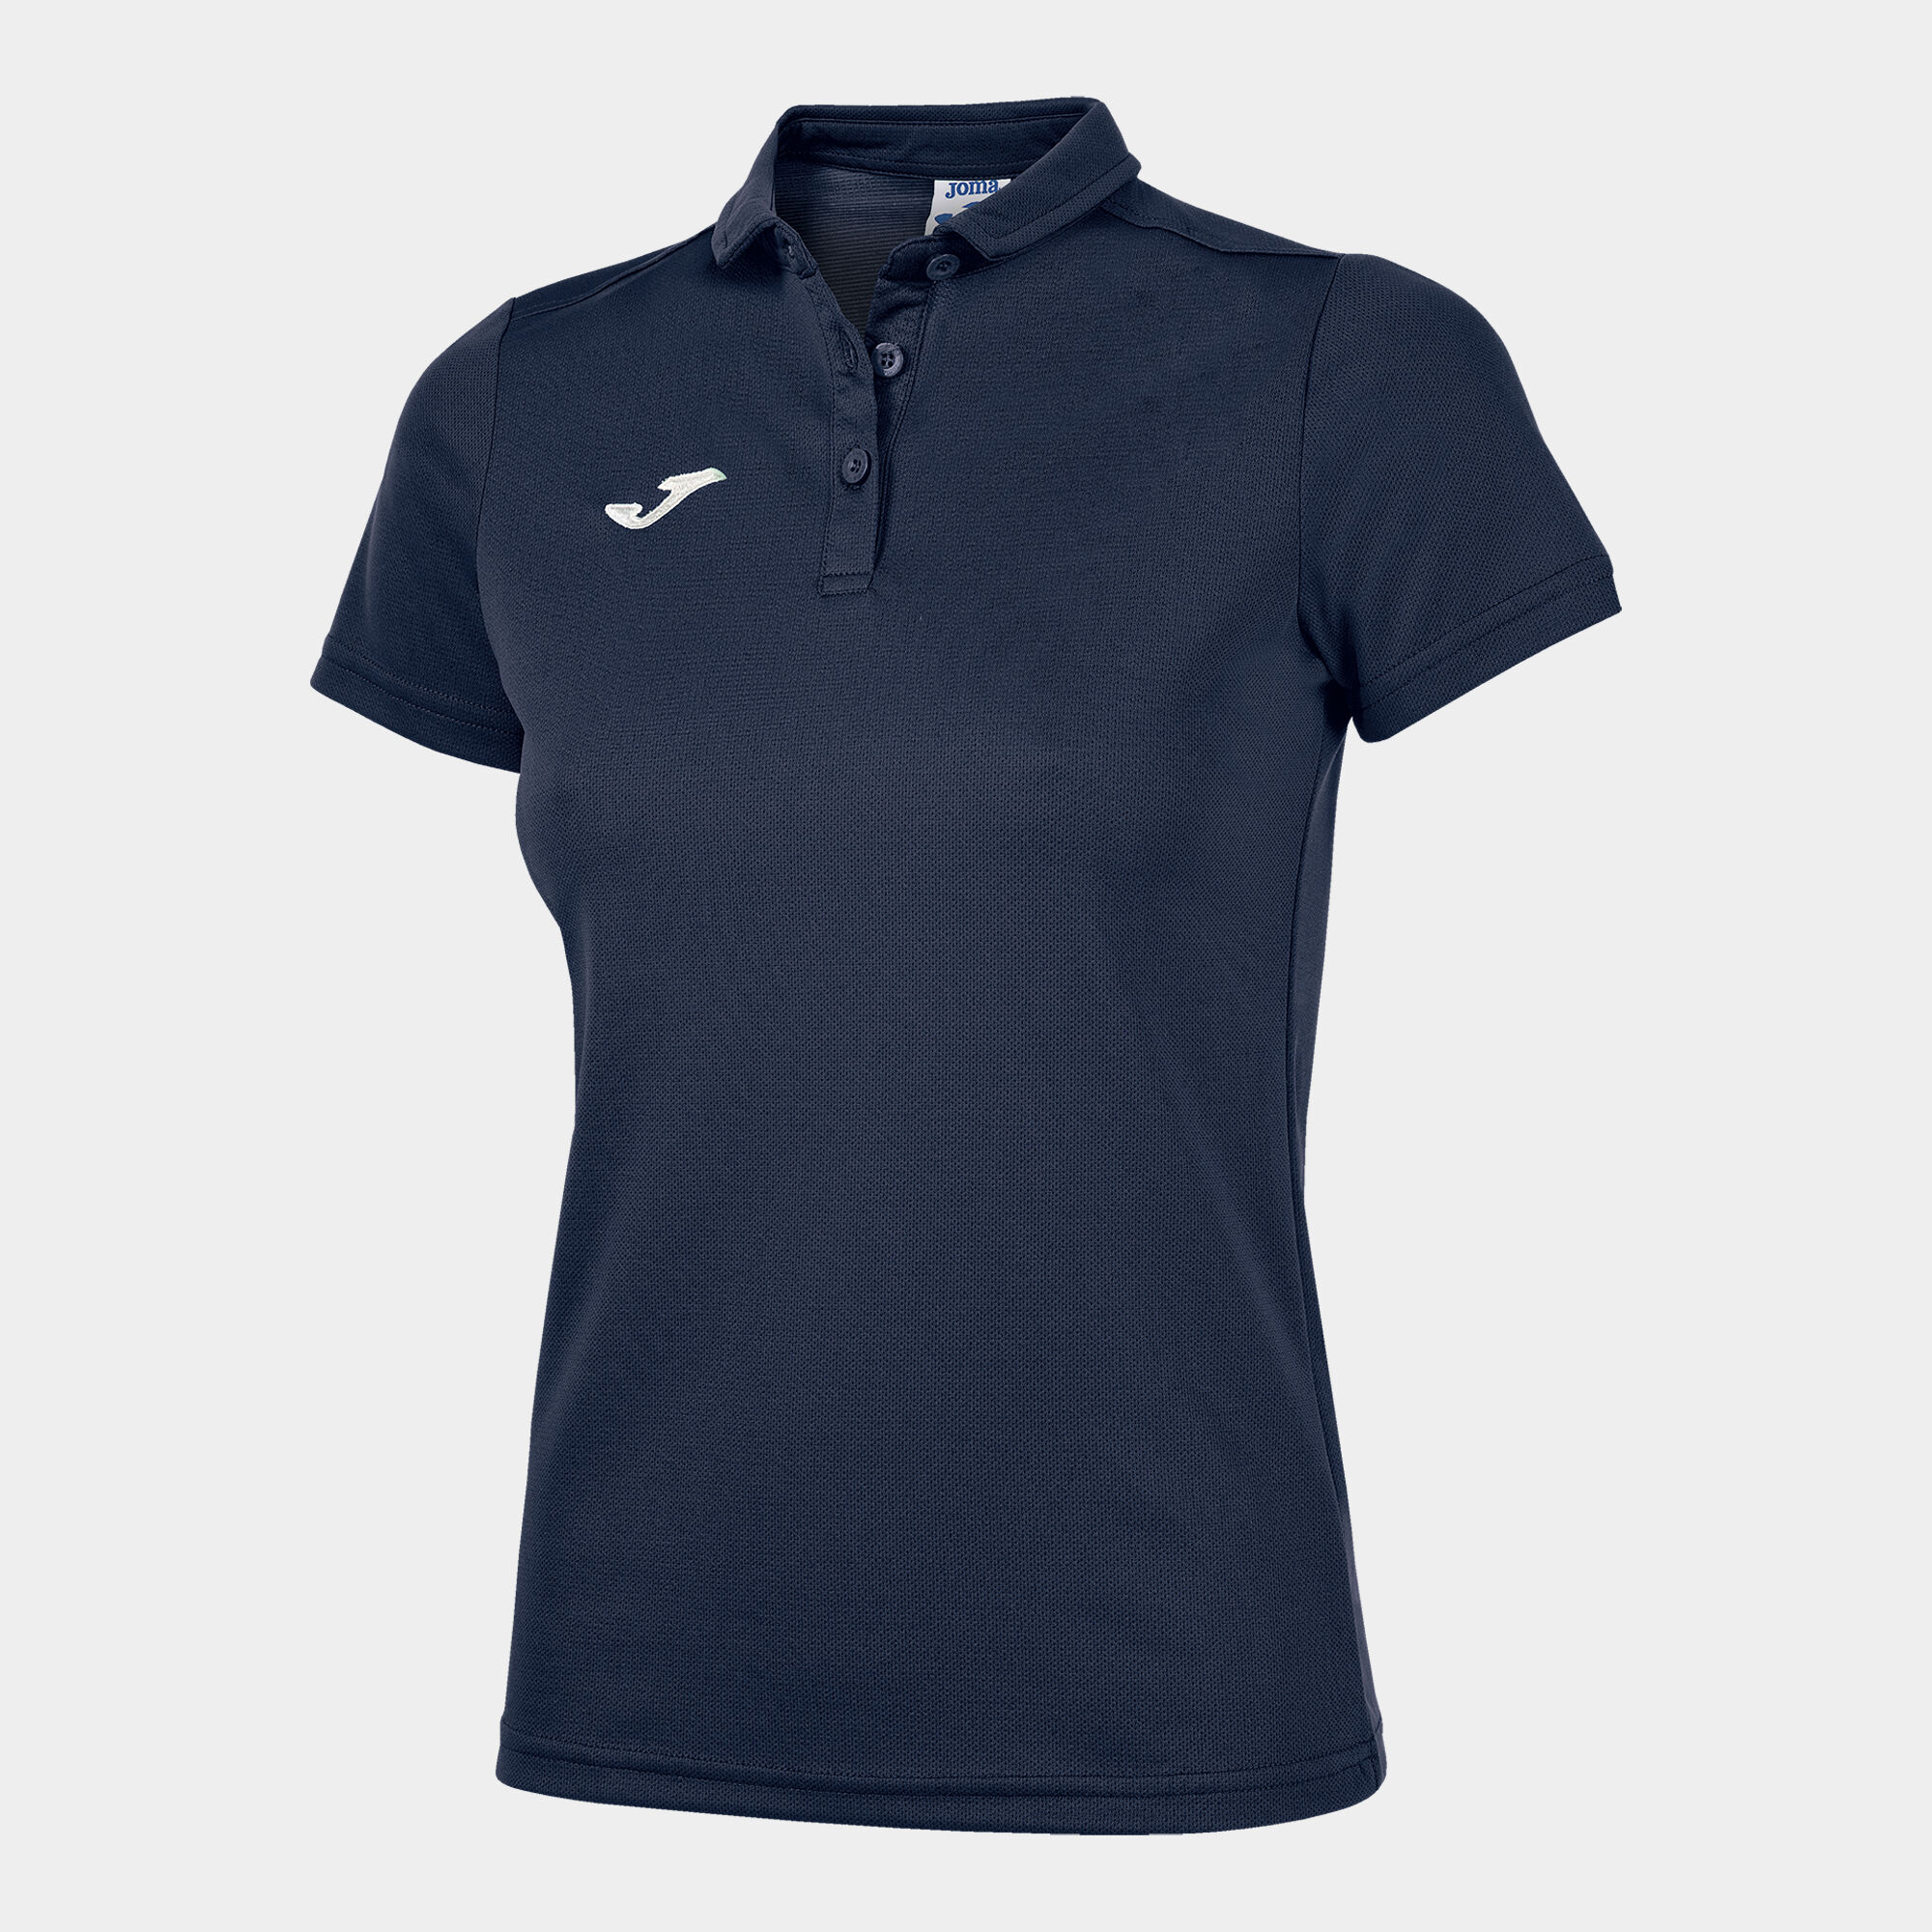 Polo shirt short-sleeve woman Hobby navy blue